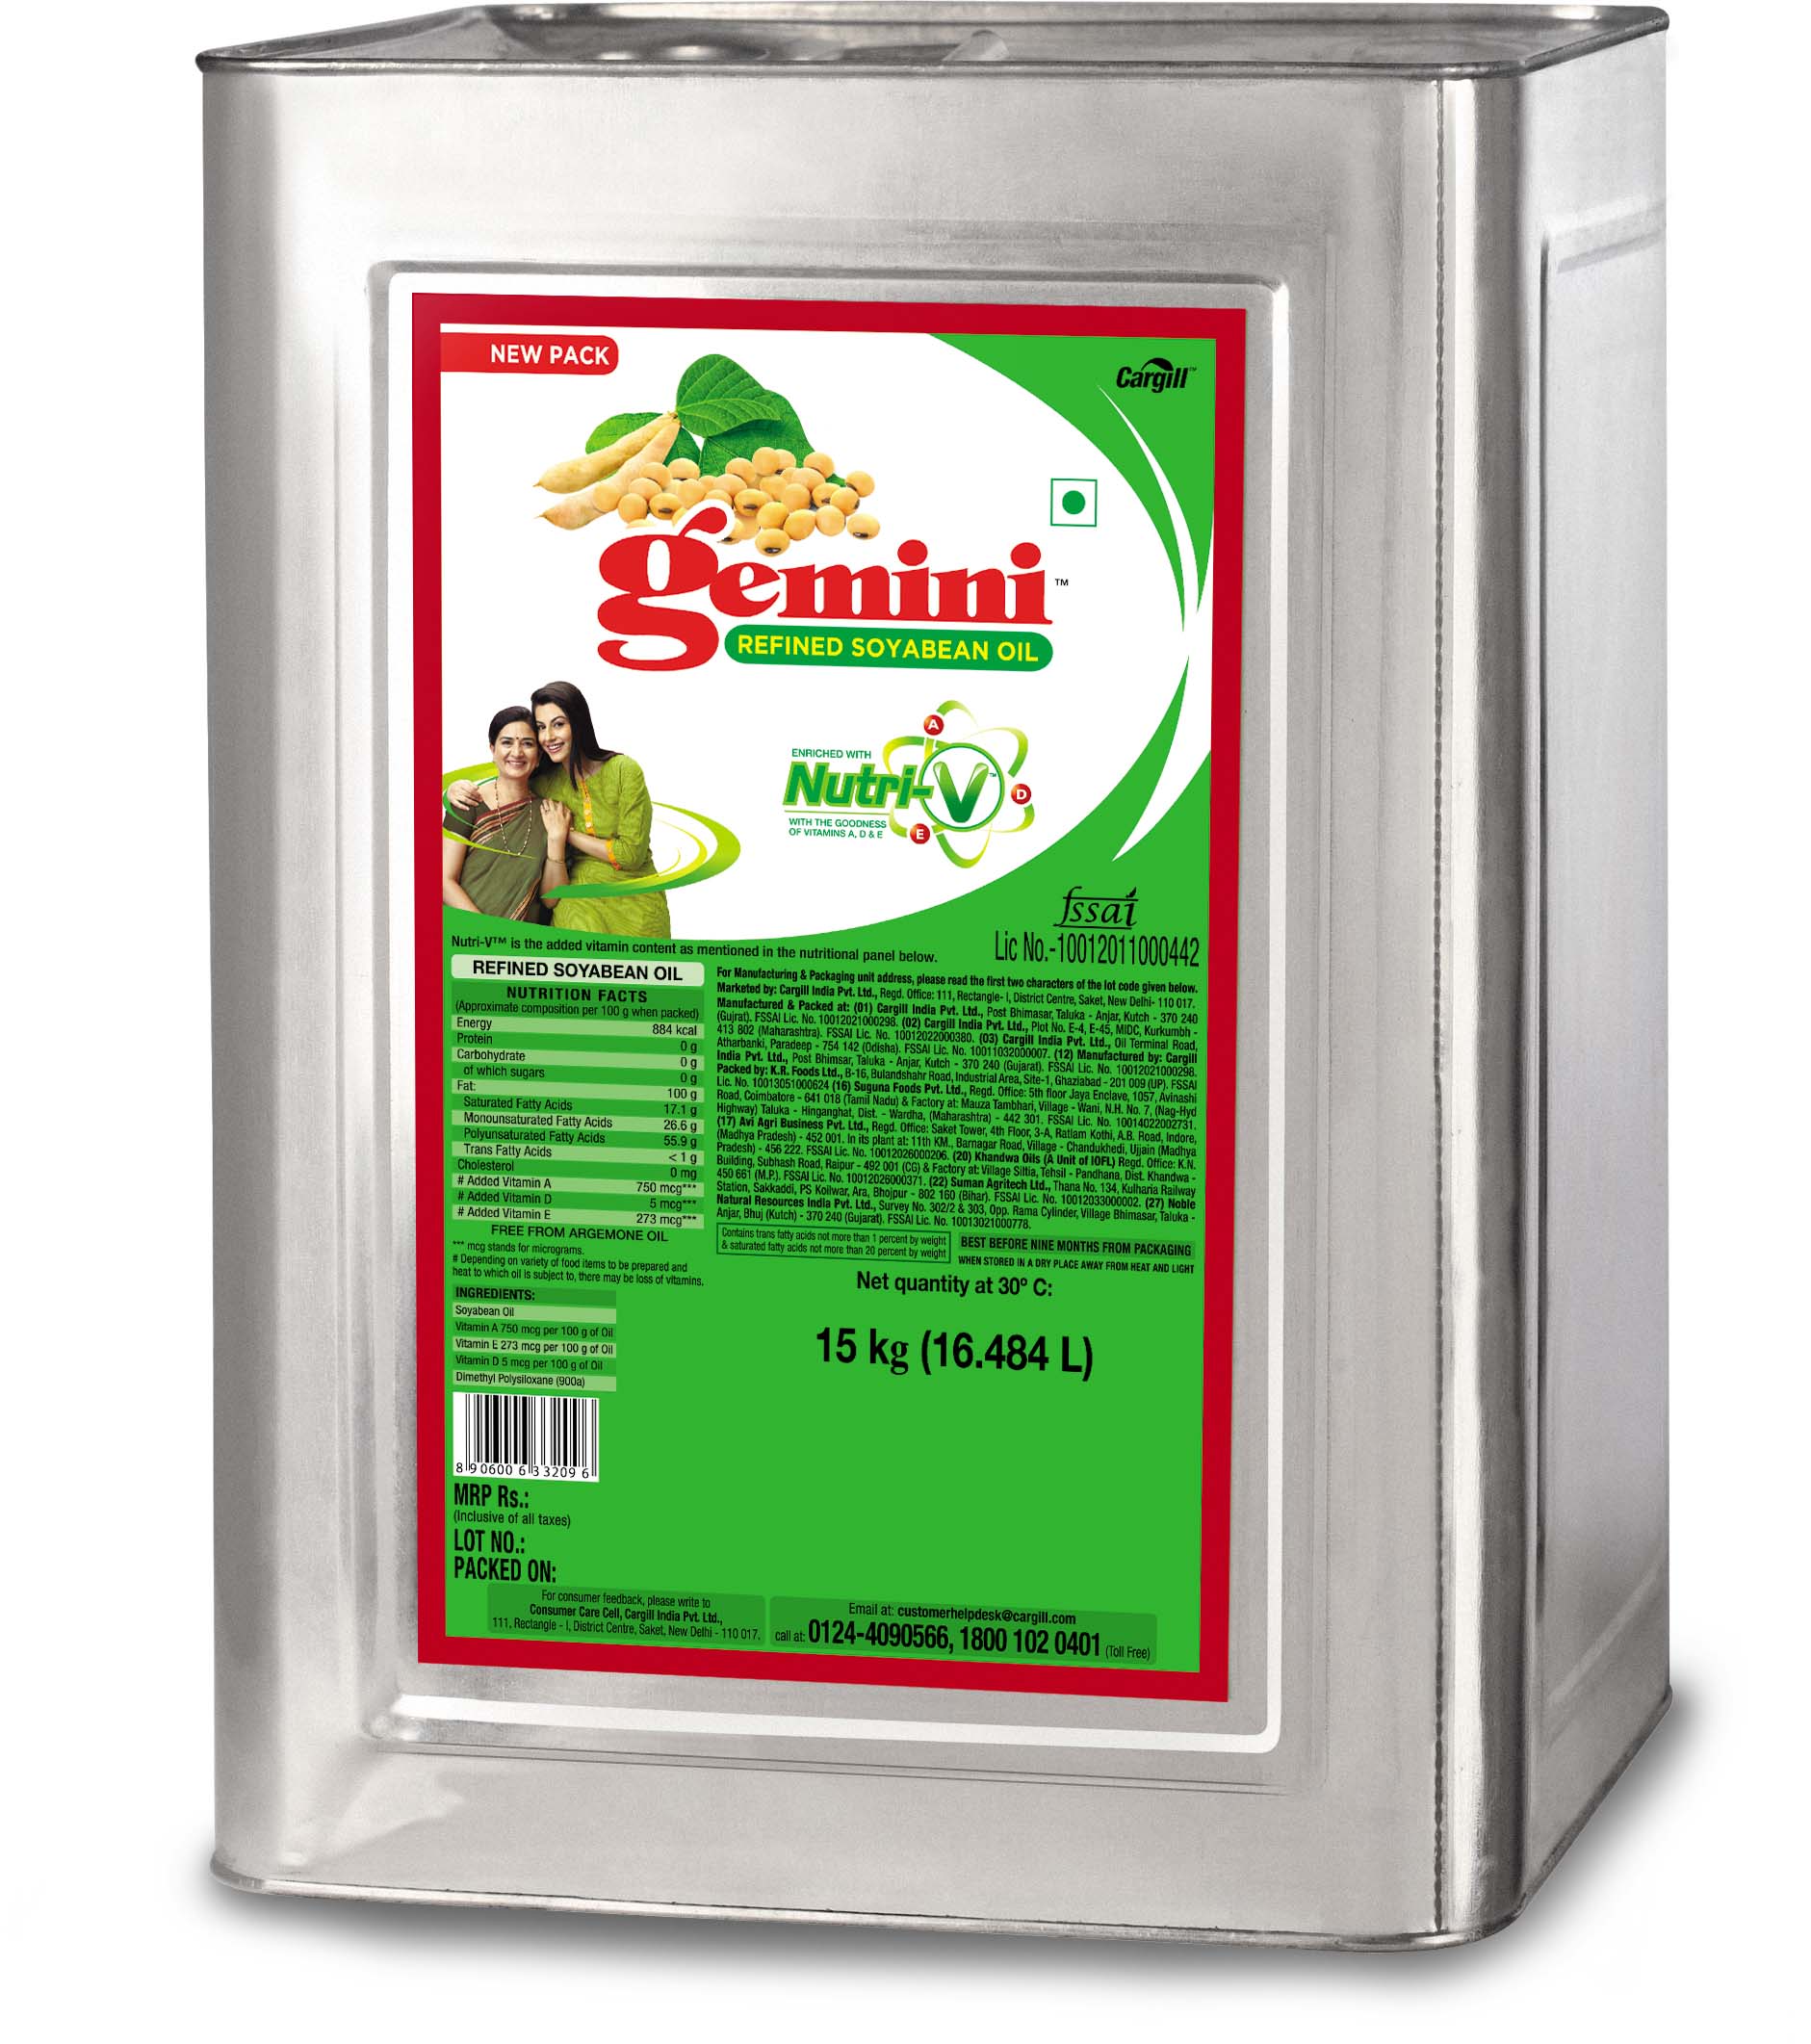 Gemini - Refined Soyabean Oil, 15 L Tin